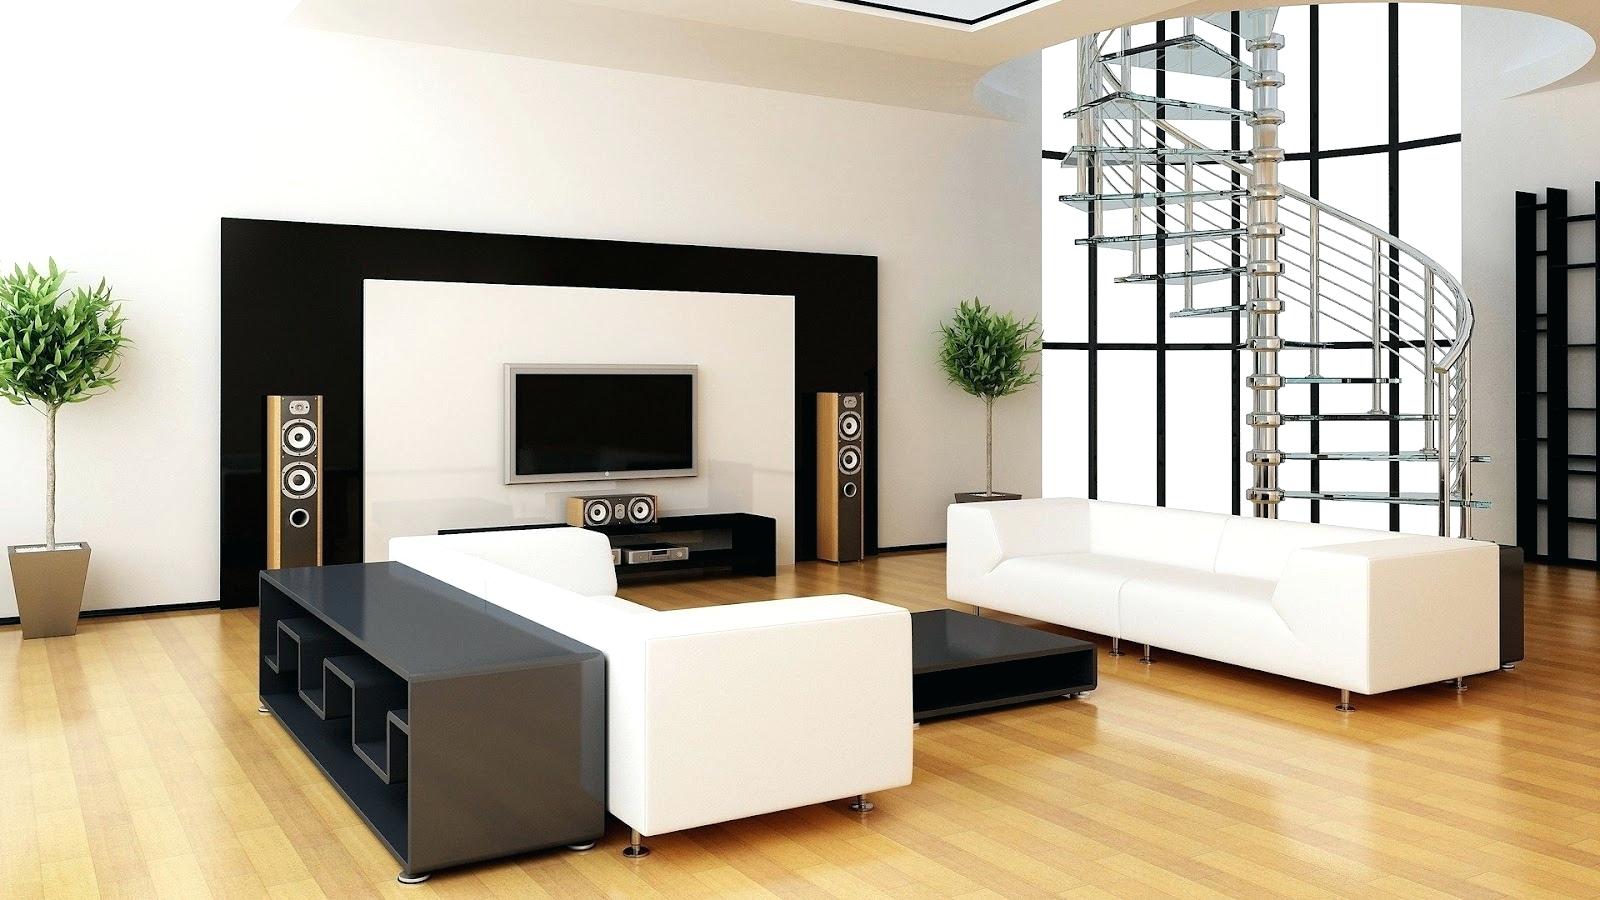 Wallpaper Steamer Homebase - Light Wood Flooring With Black Walls - HD Wallpaper 